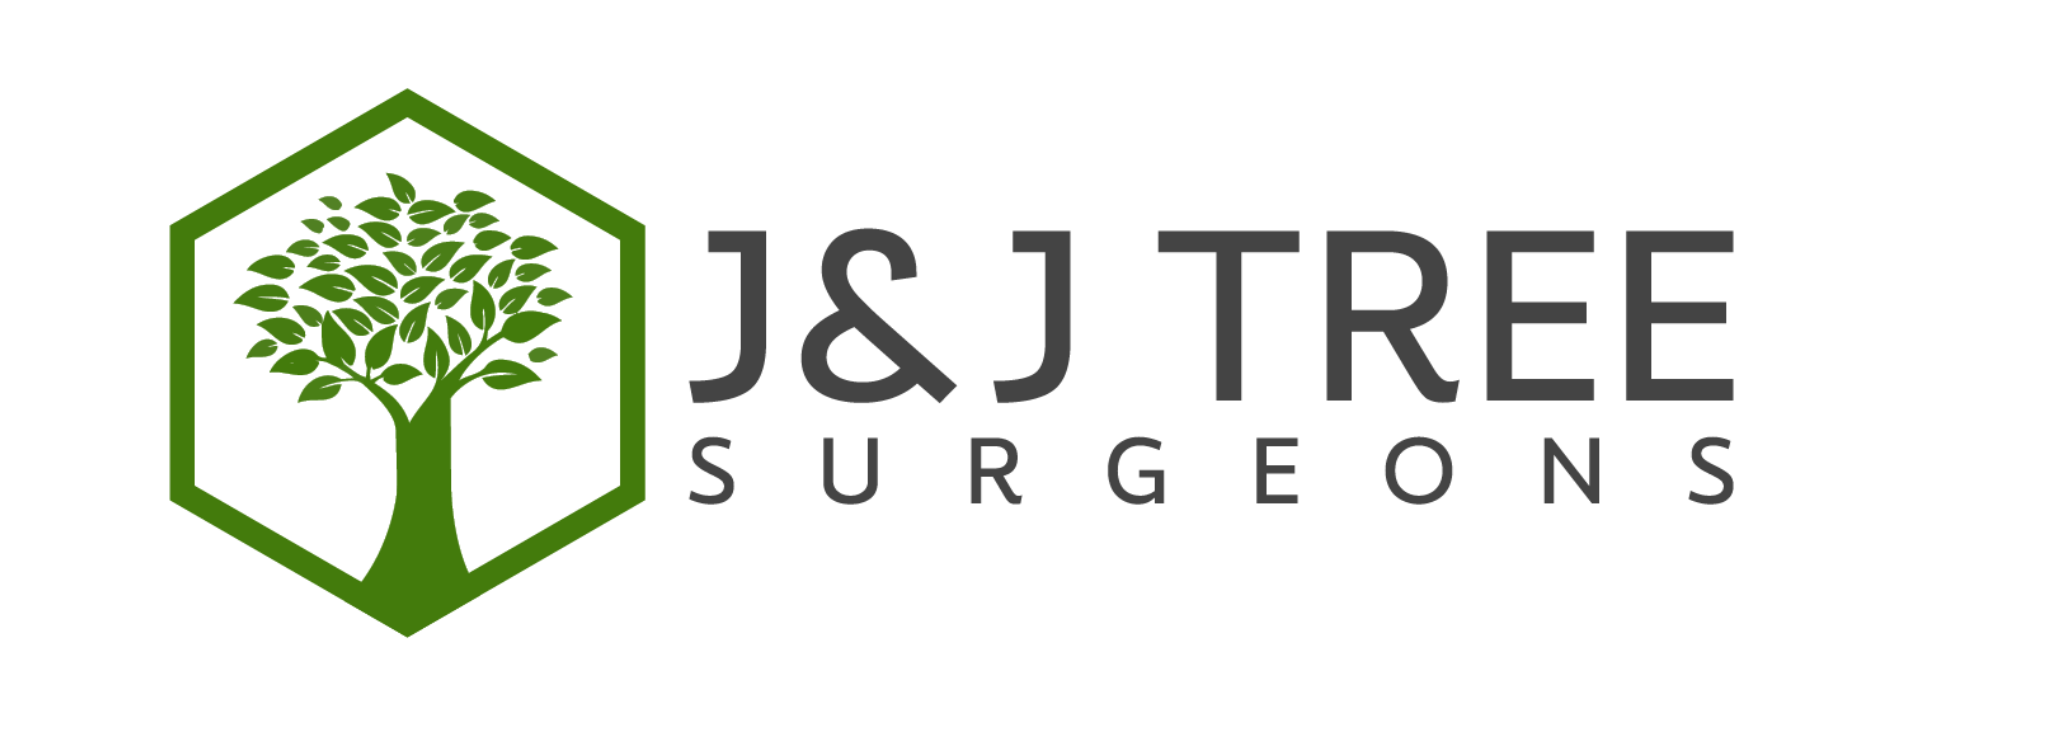 J&J Tree Surgeon